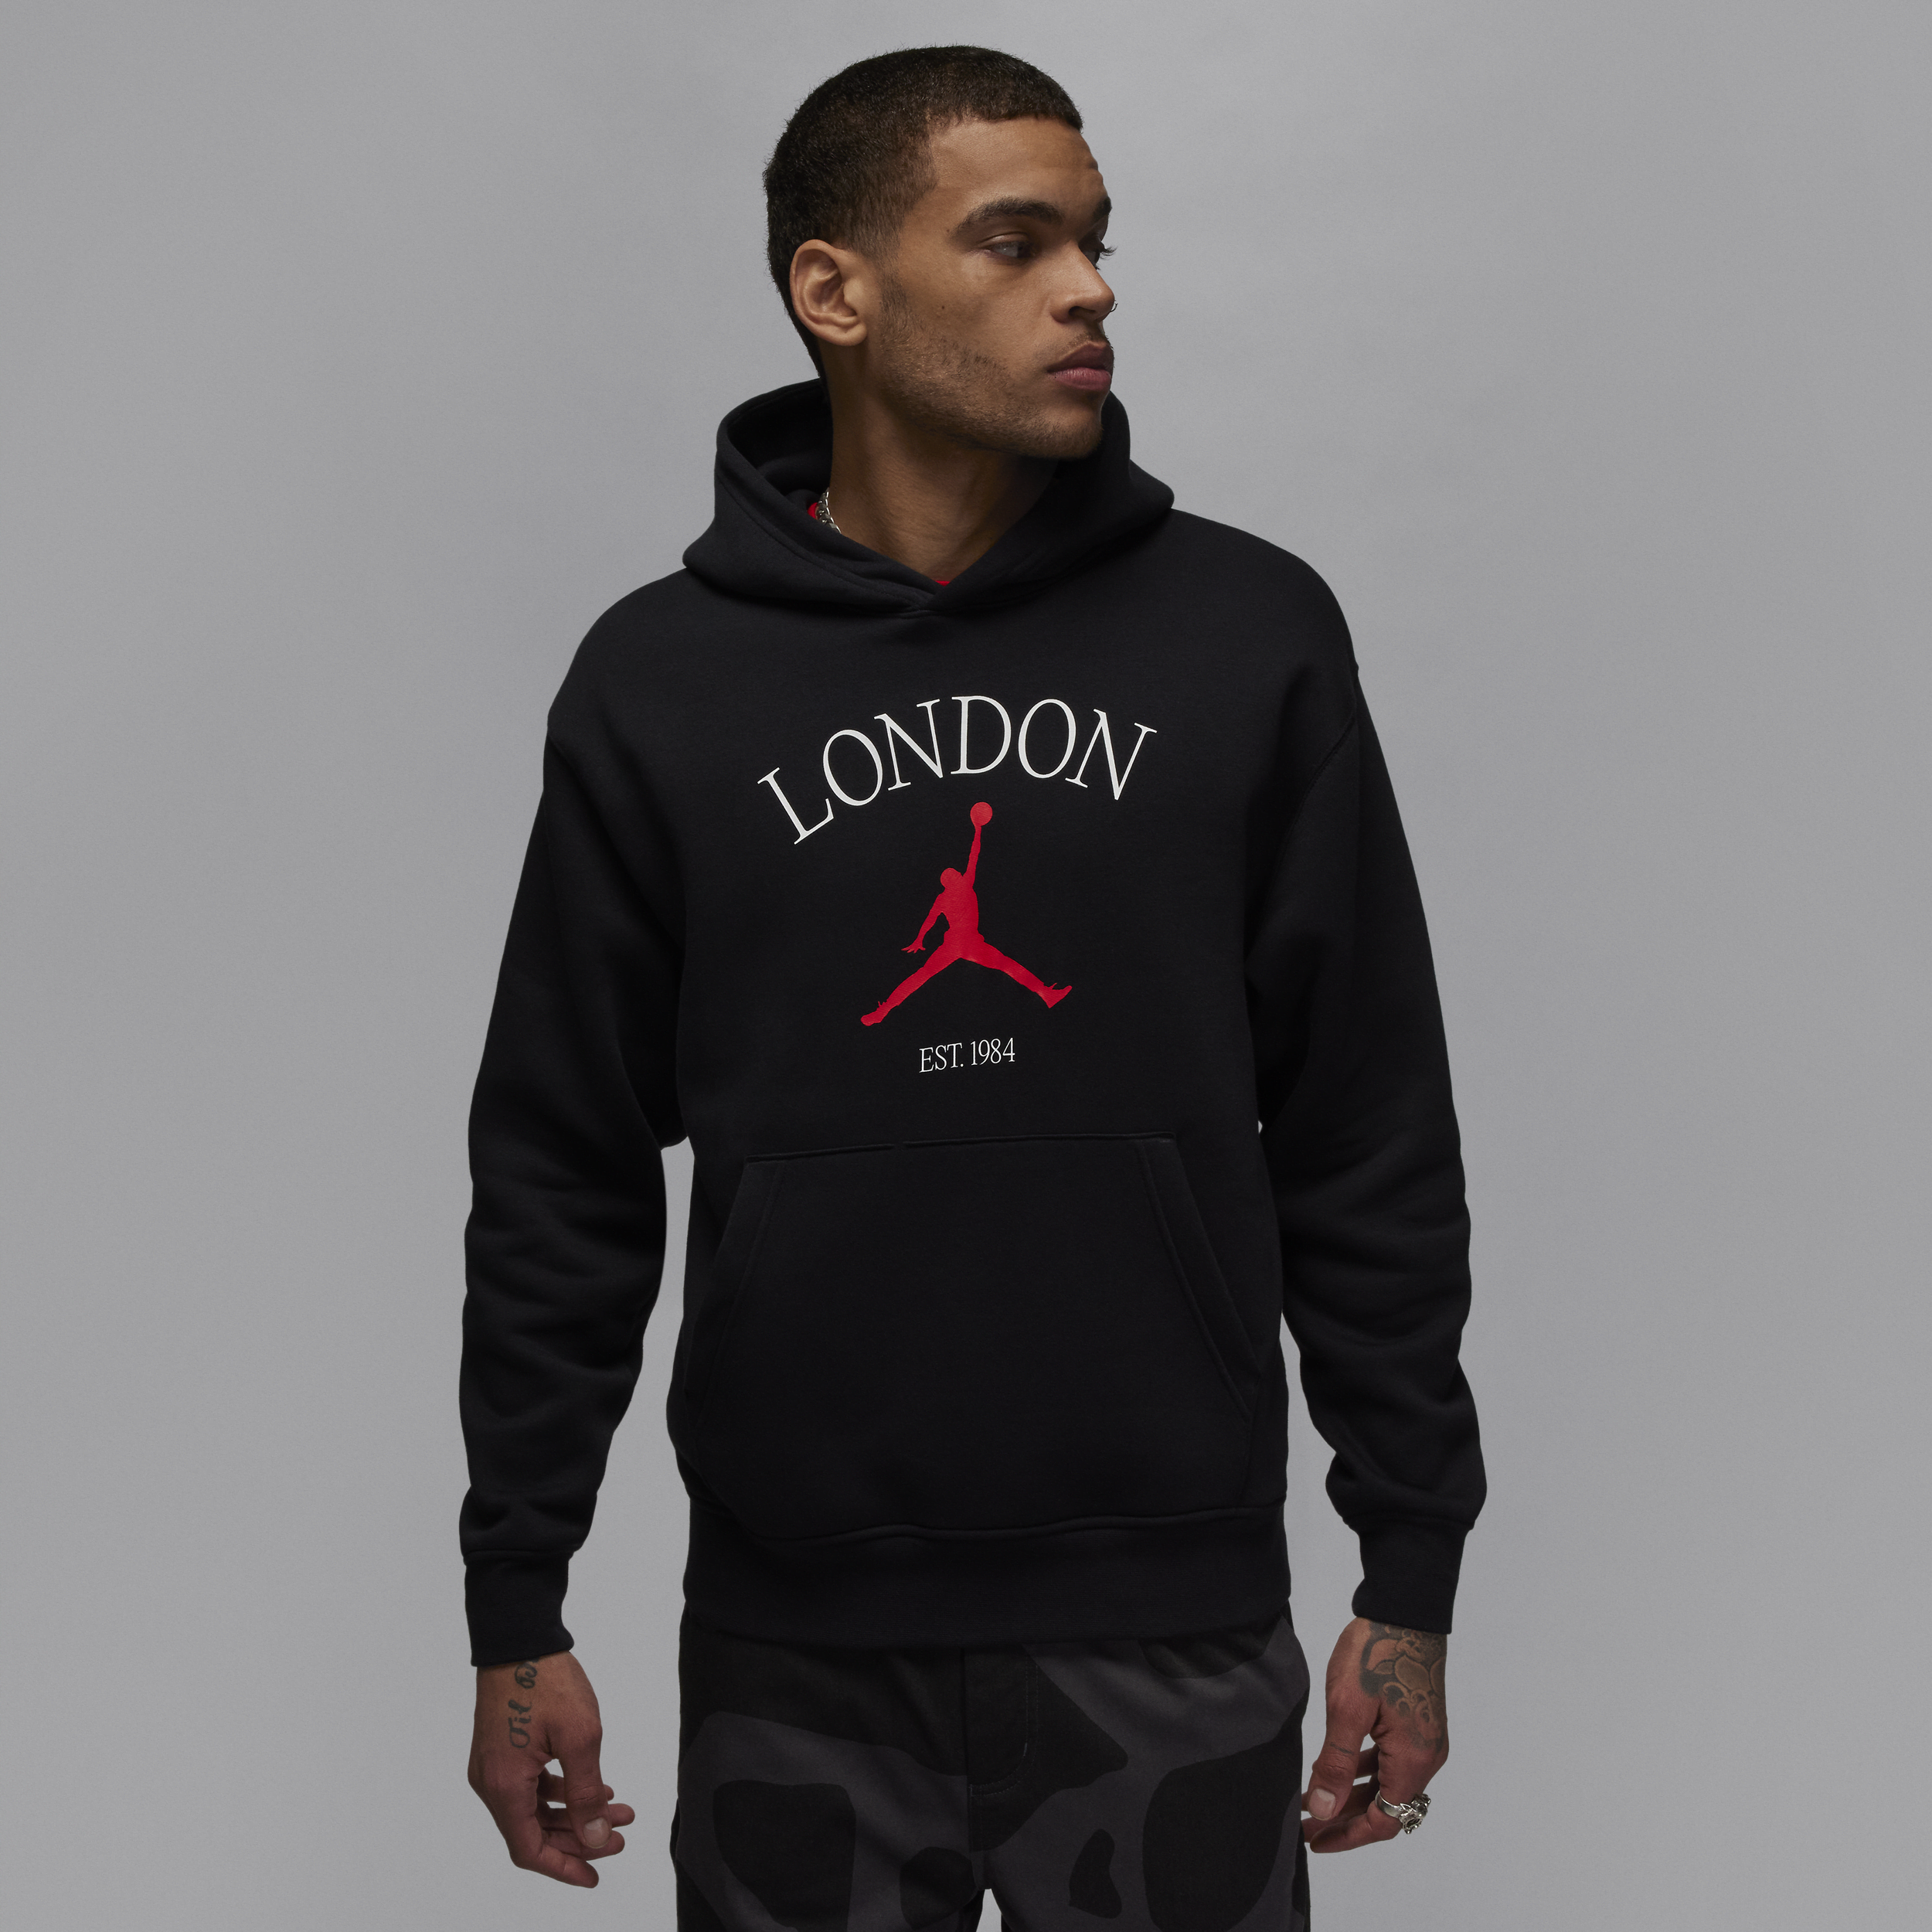 Jordan London Sudadera con capucha - Hombre - Negro